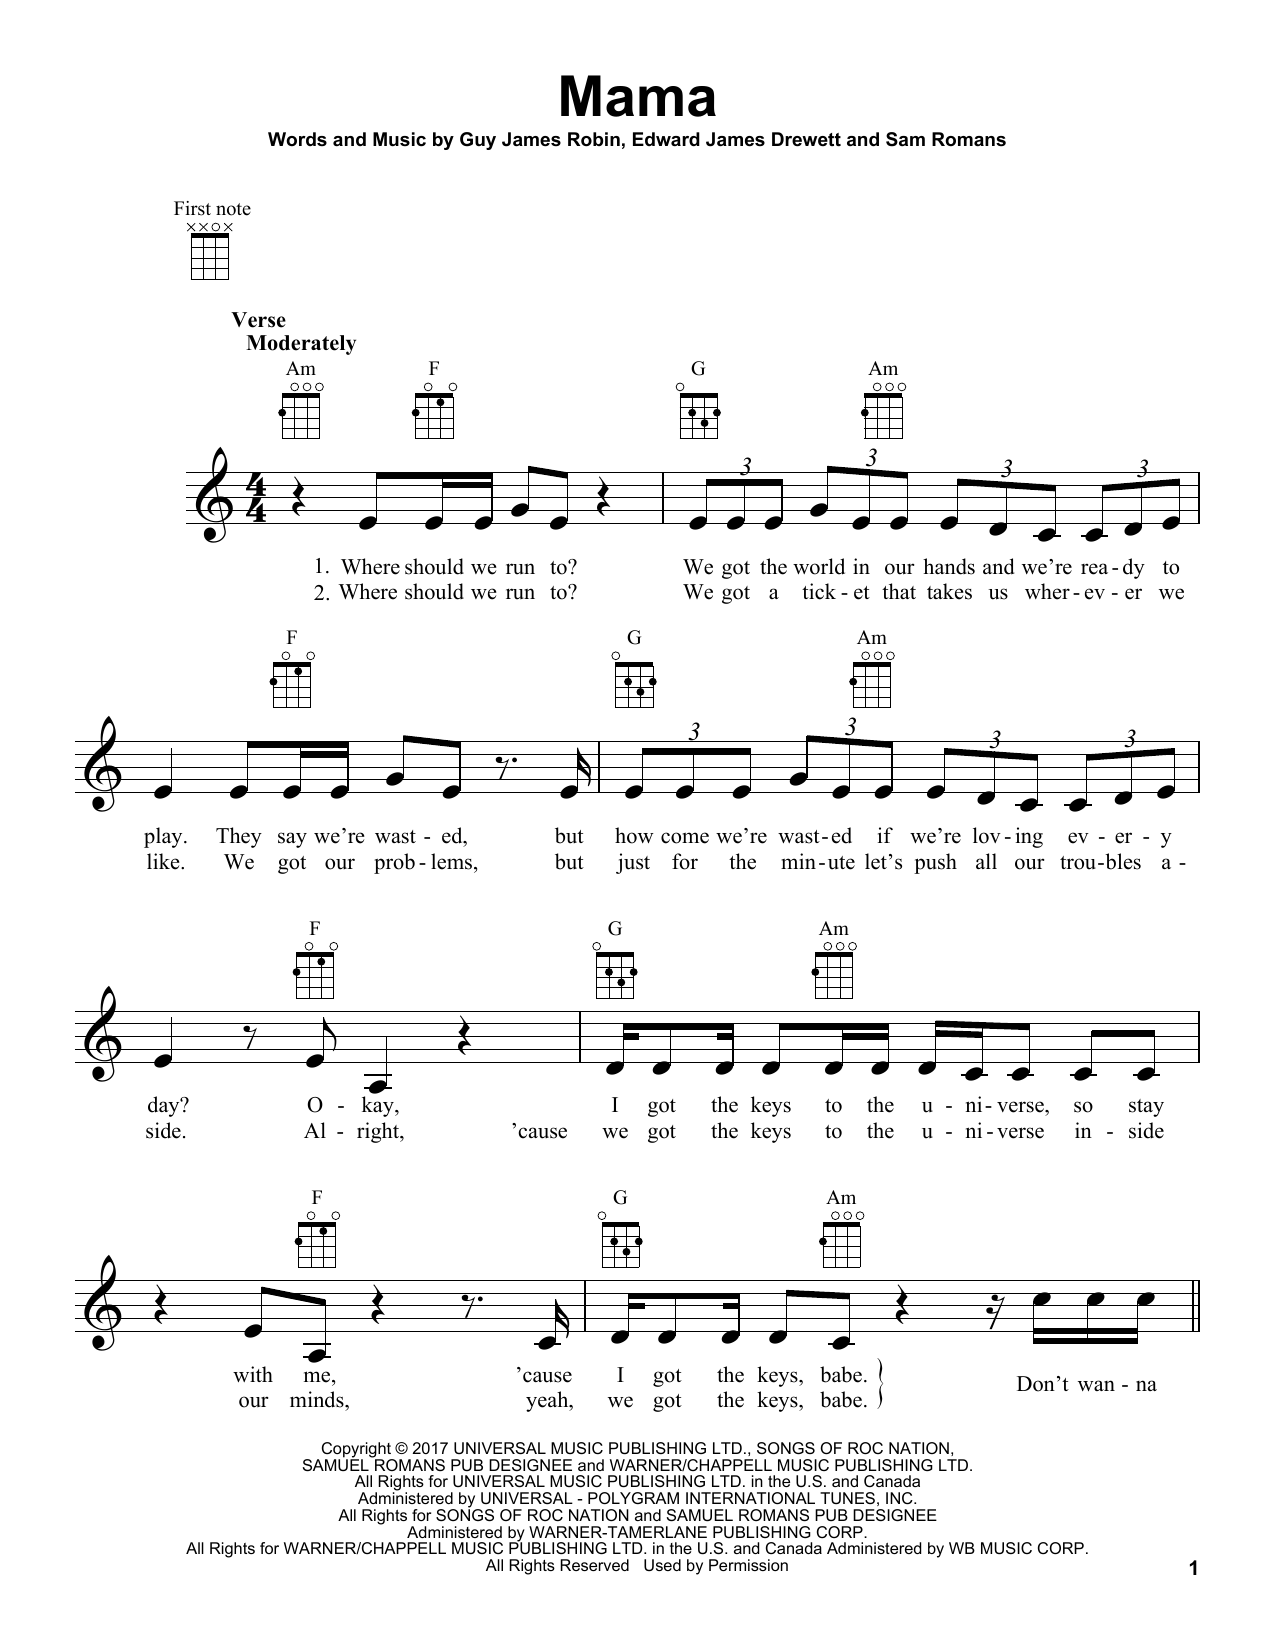 Jonas Blue Mama (feat. William Singe) Sheet Music Notes & Chords for Ukulele - Download or Print PDF